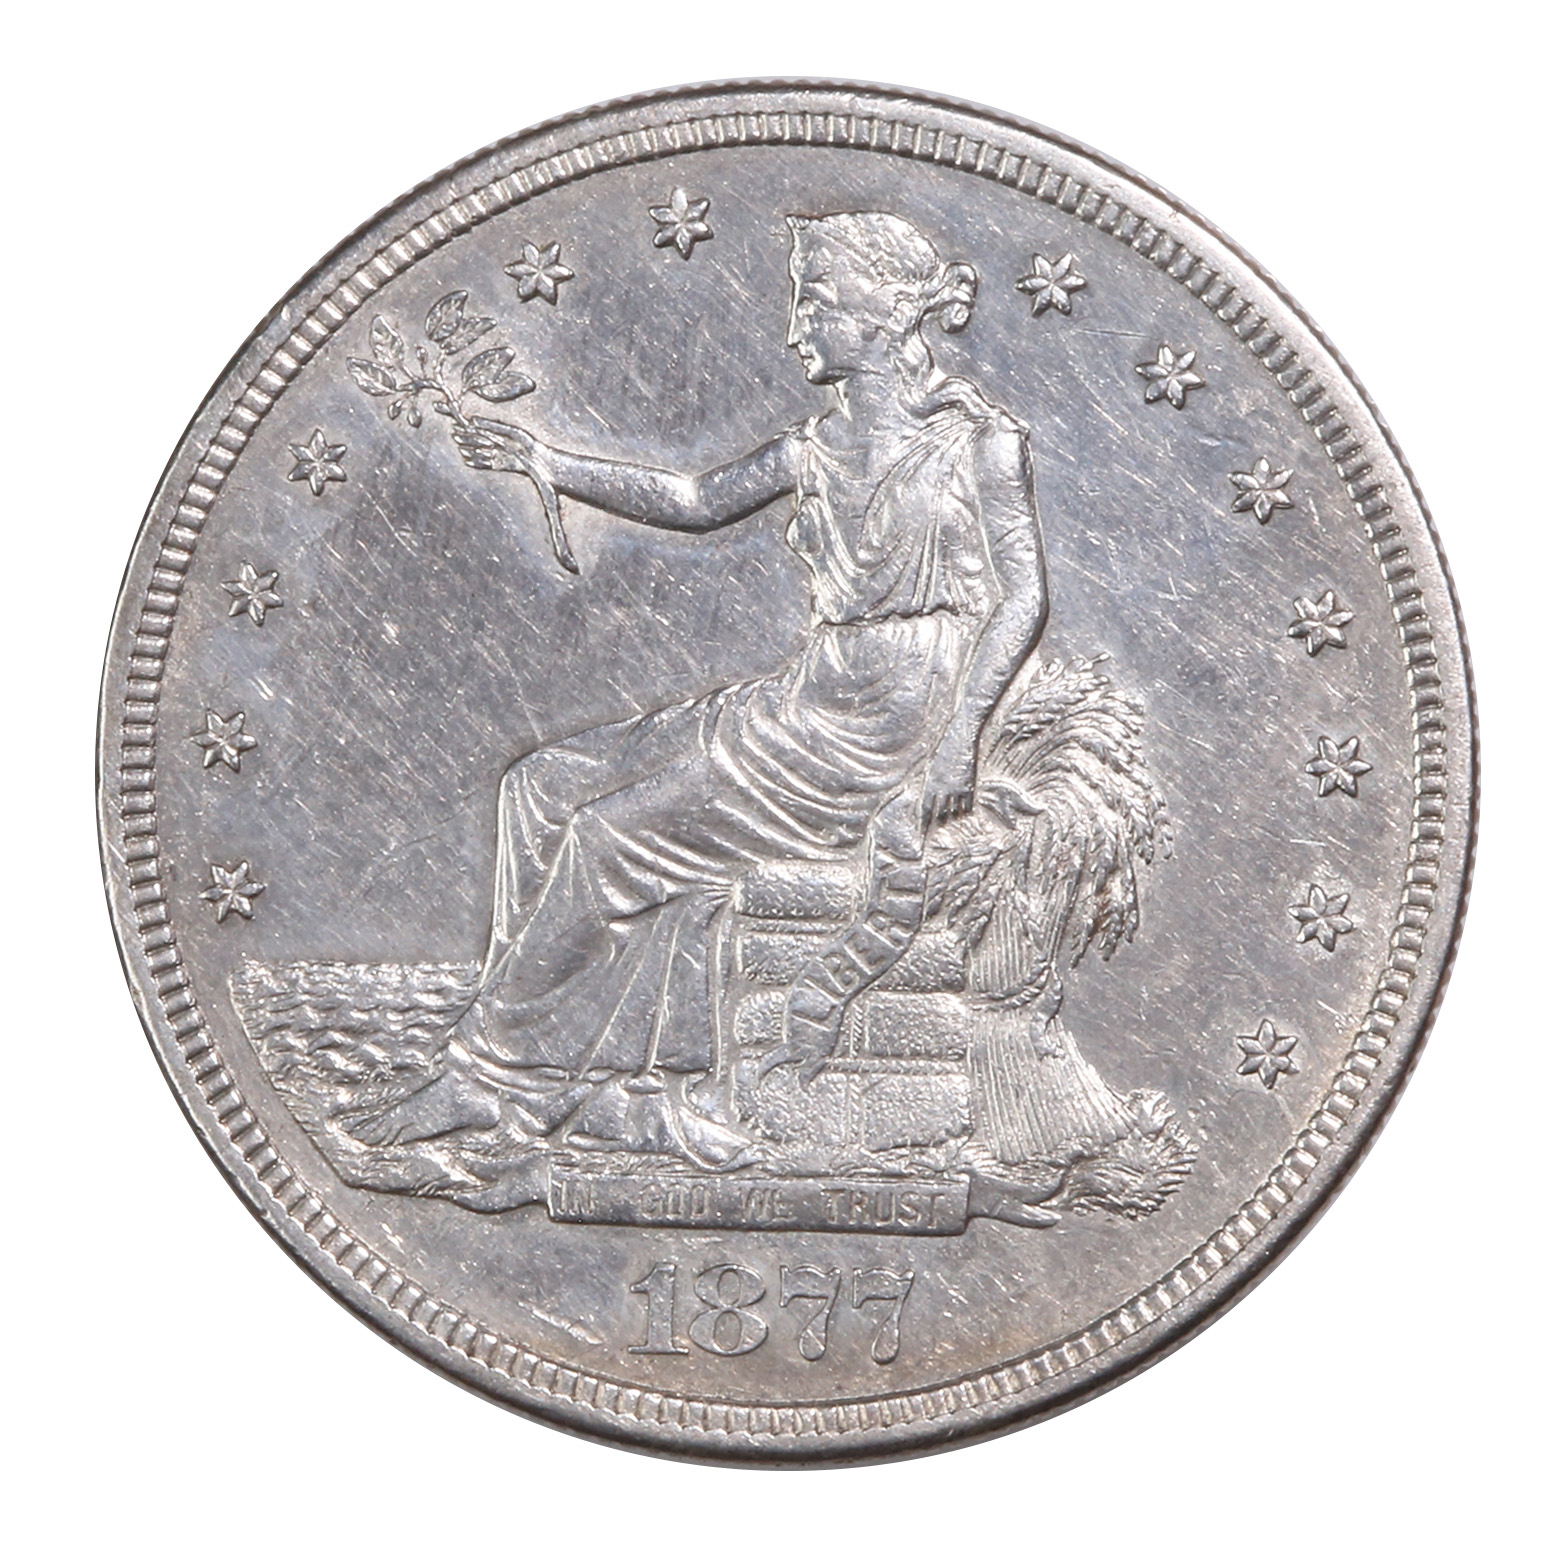 U.S. Trade Dollar 1877-S AU porous